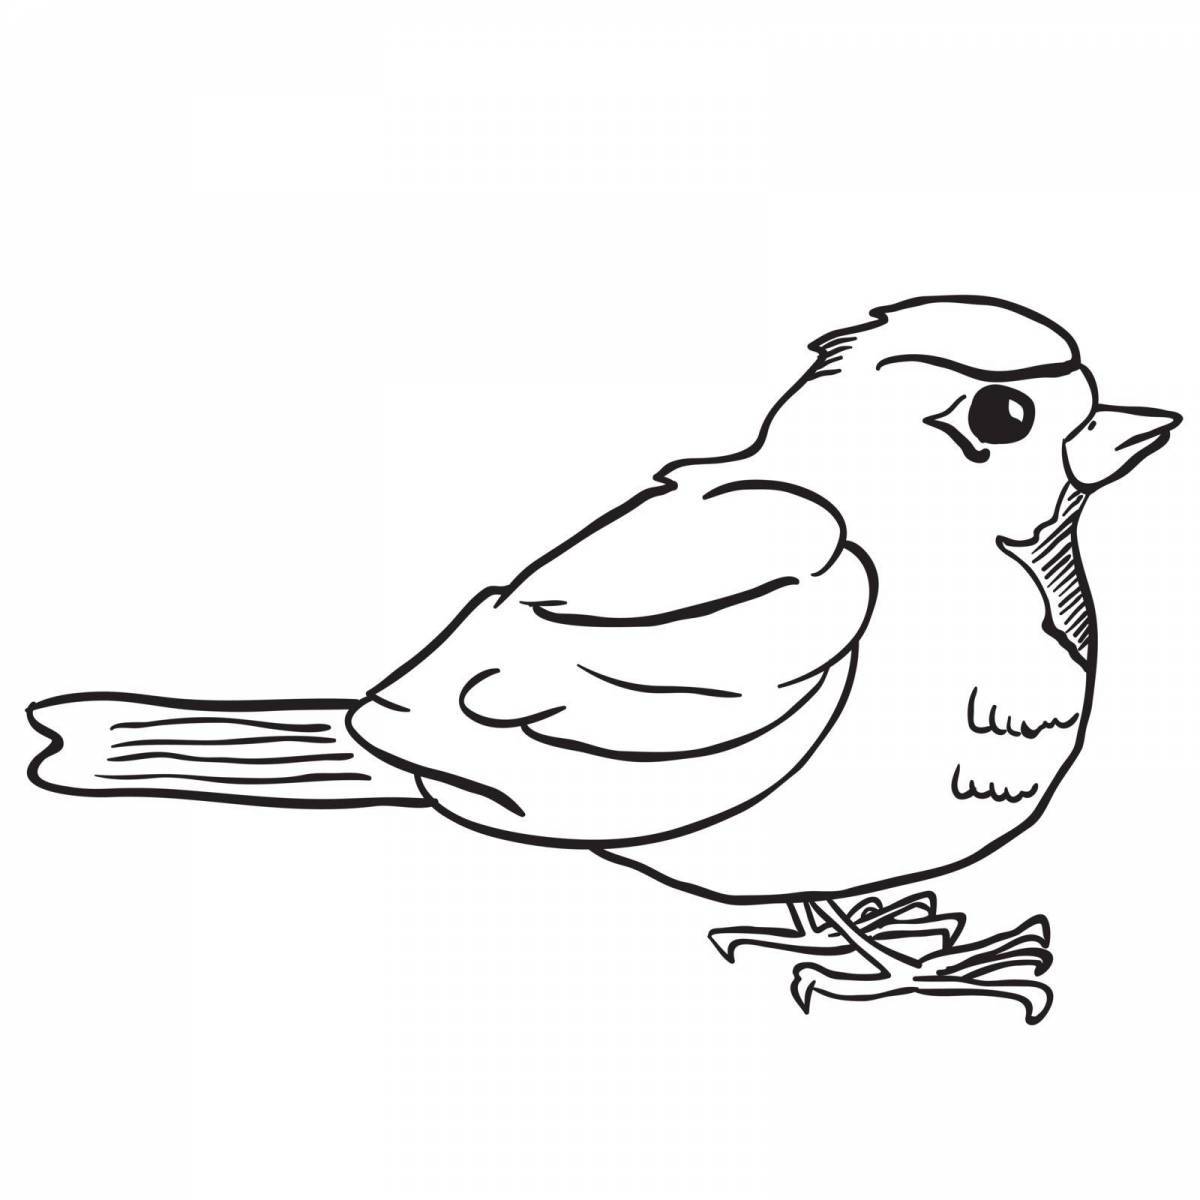 Disheveled sparrow #3